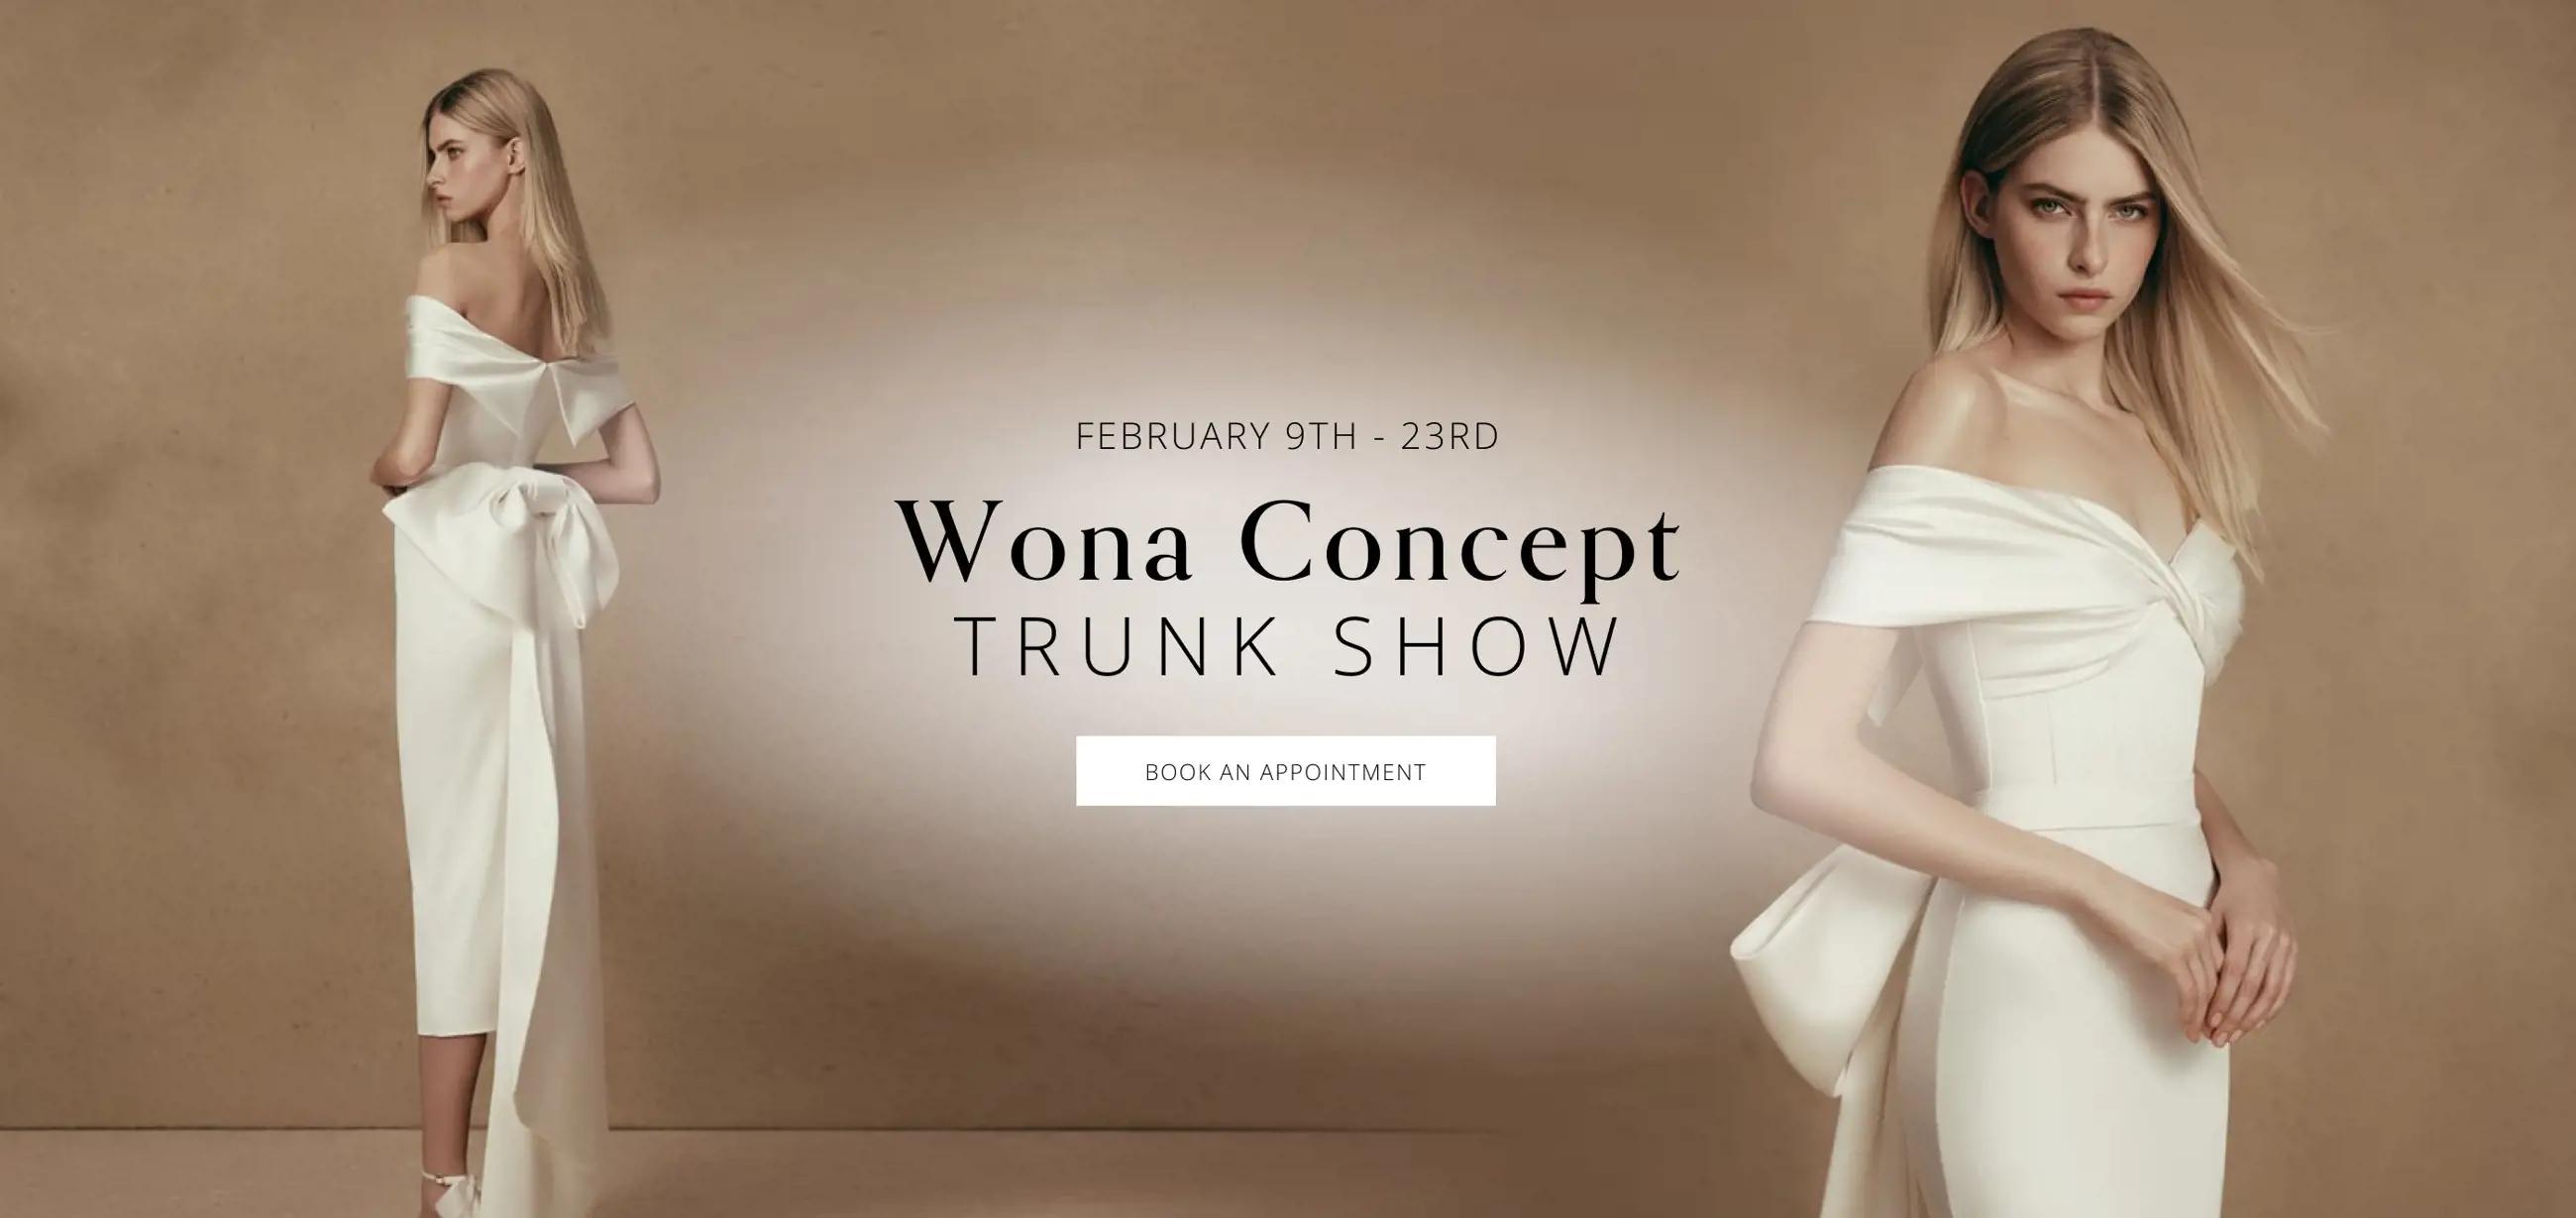 "Wona Concept Trunk Show" banner for desktop